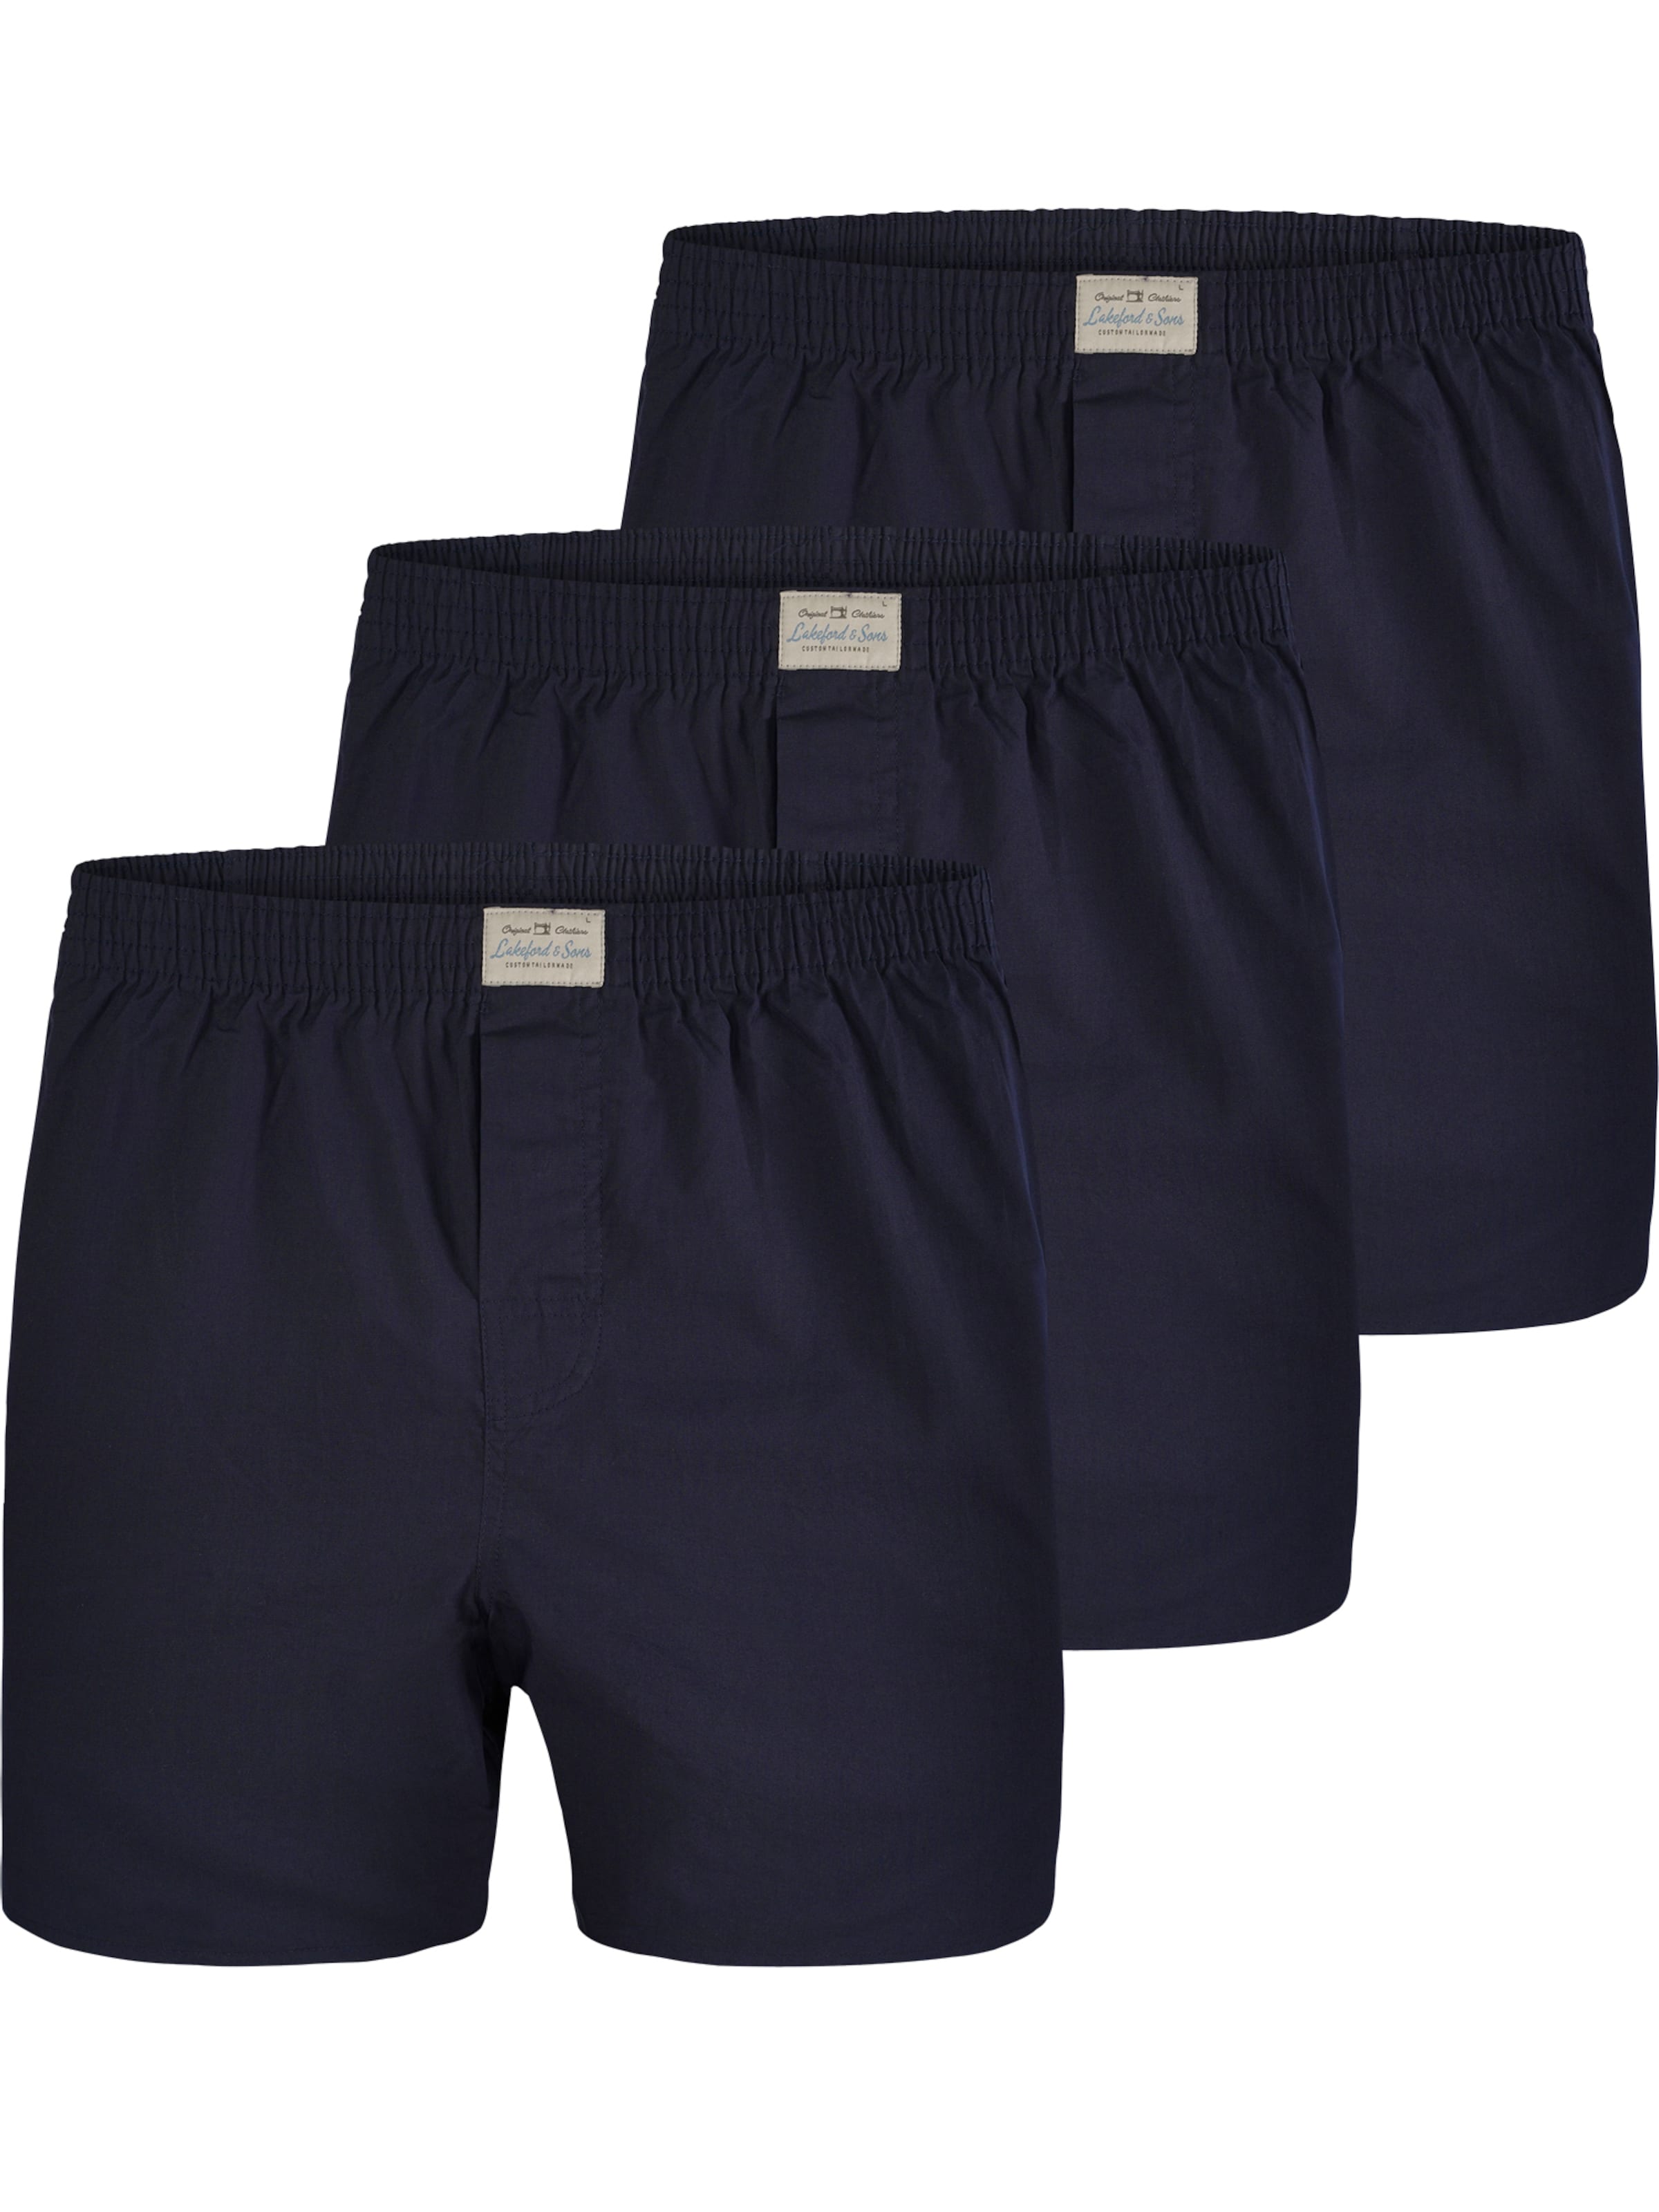 Männer Wäsche Lakeford & Sons Web Boxershorts ' 3-Pack 'Uni Dyed' ' in Navy - XG57851